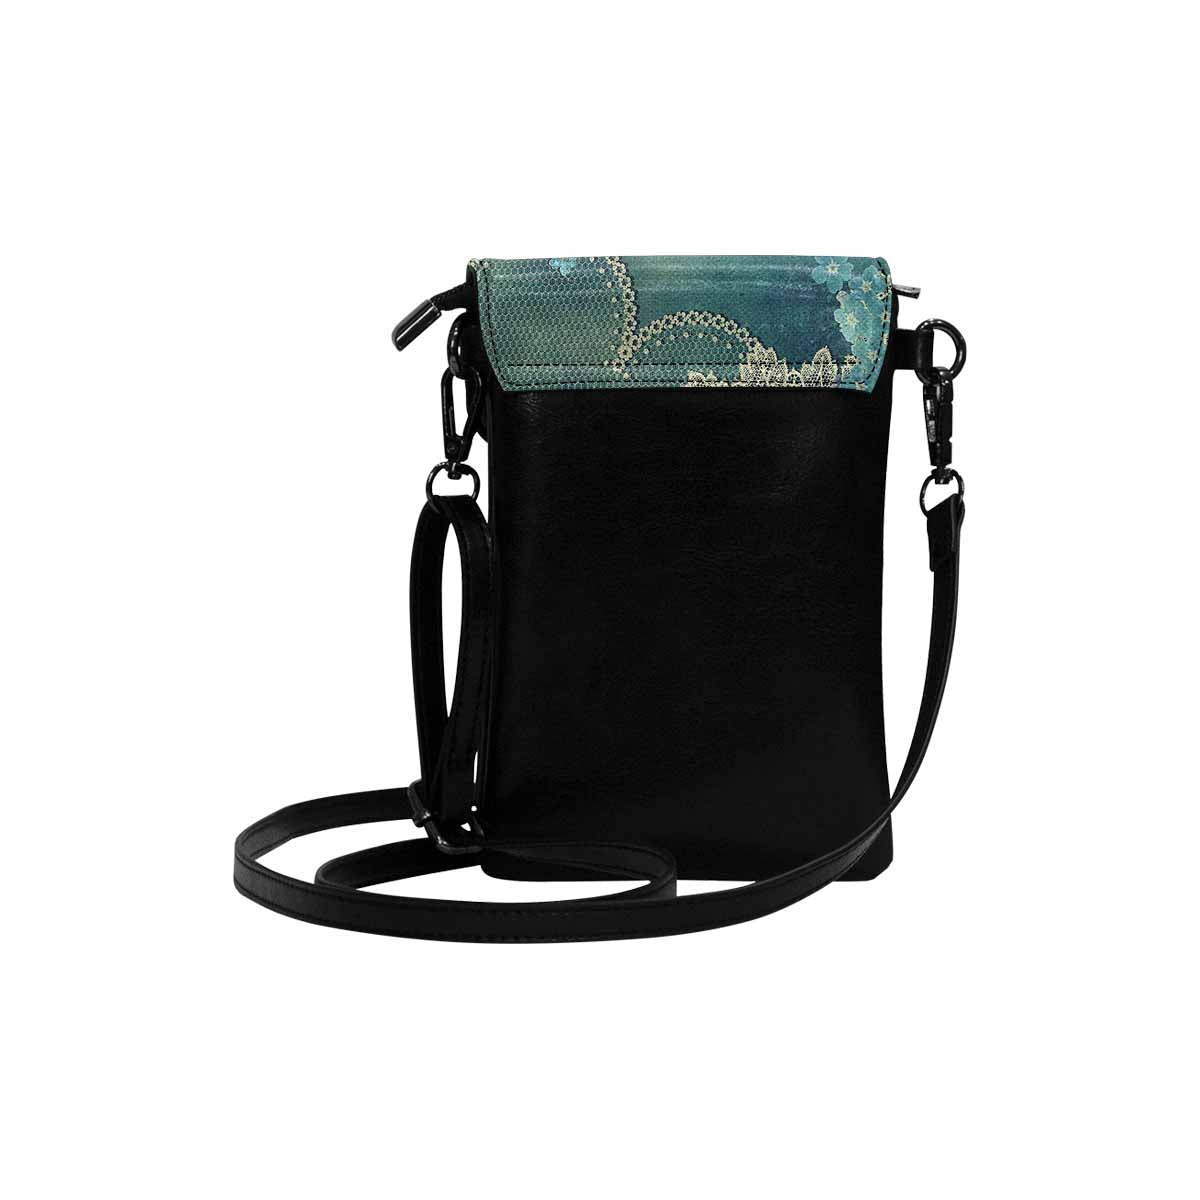 Victorian lace print cell phone purse, mobile purse, Design 04